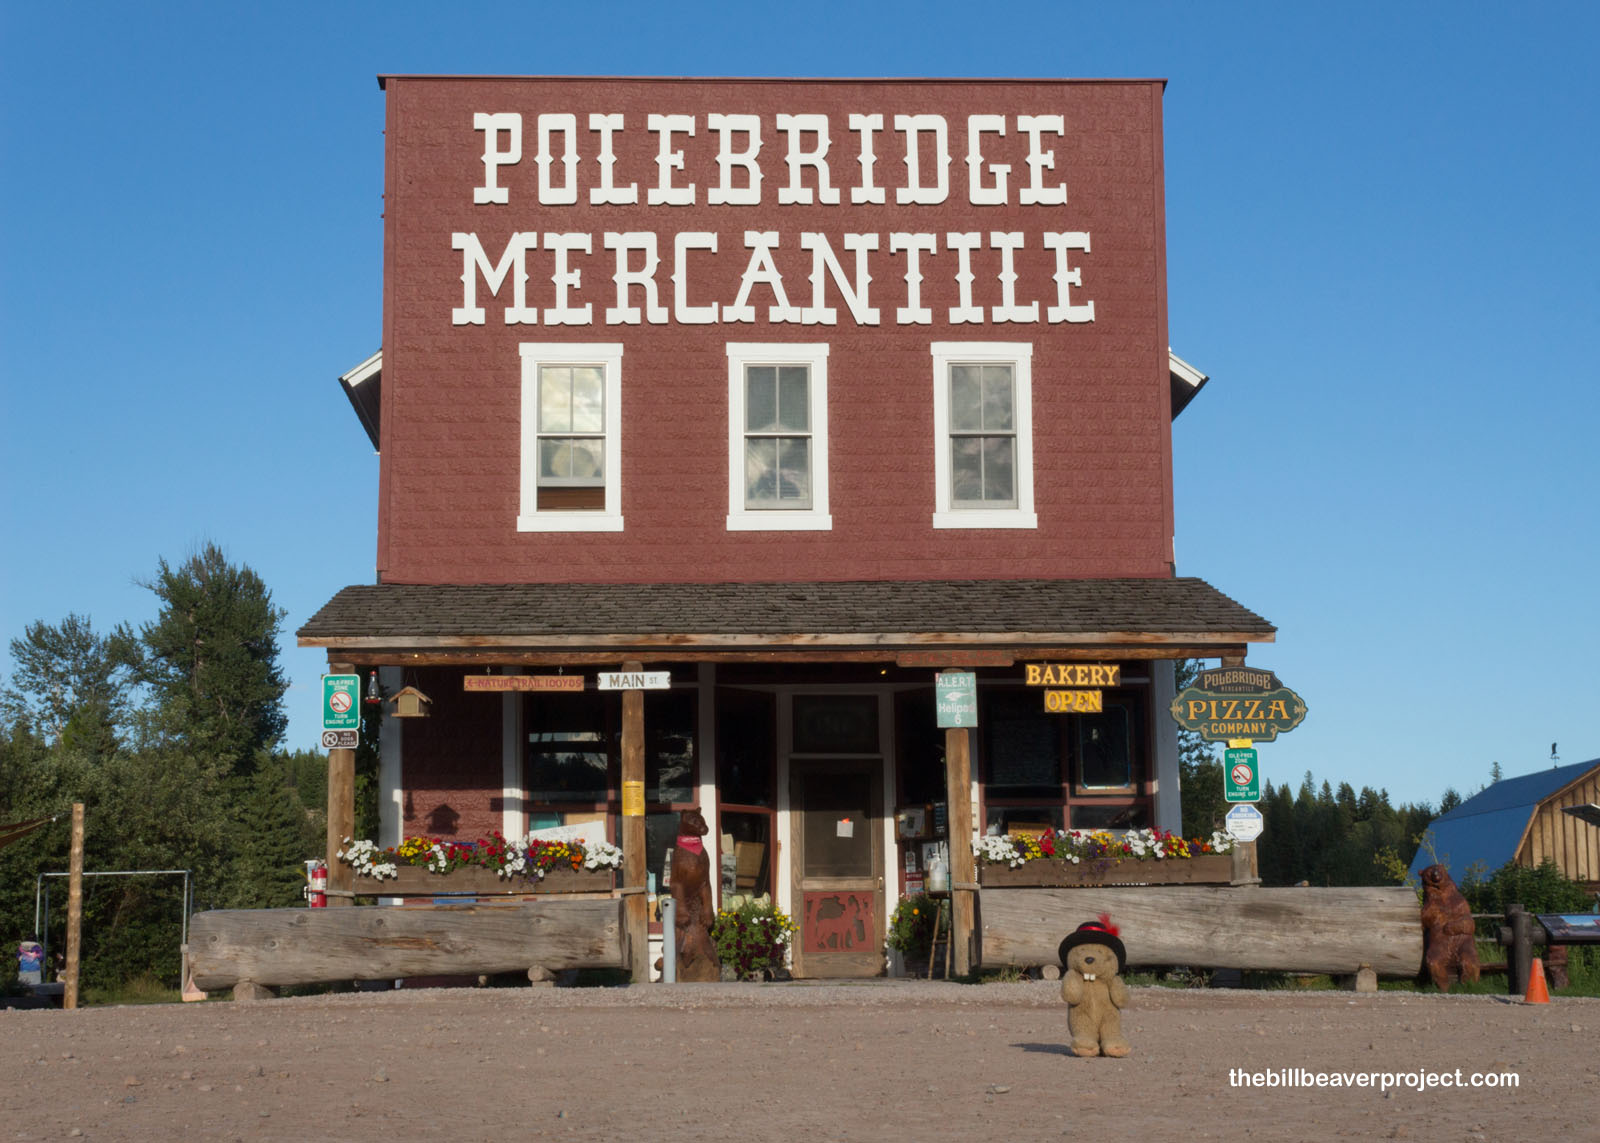 Polebridge Mercantile